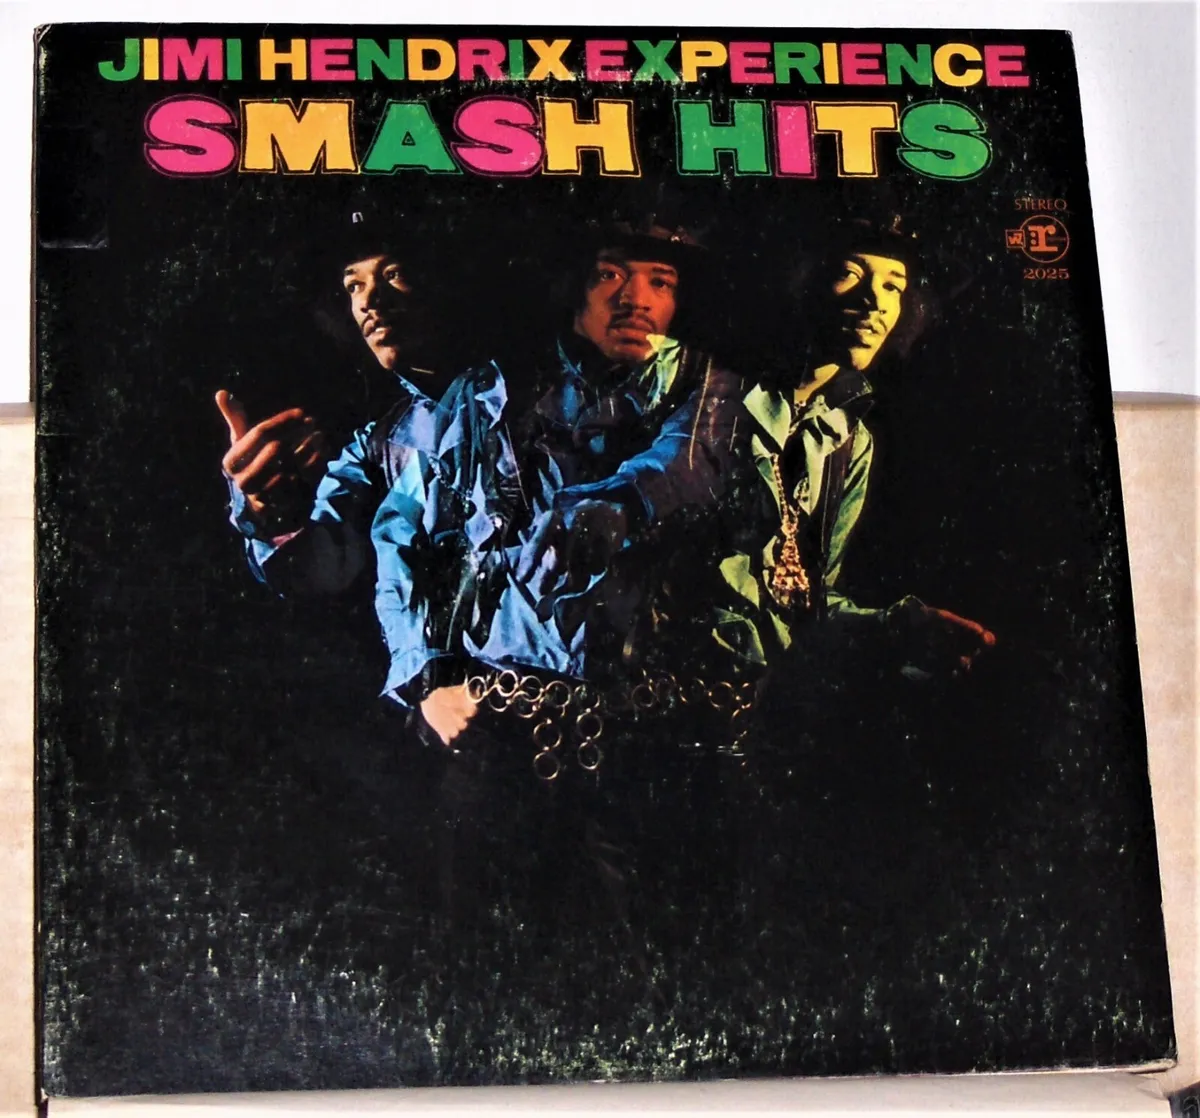 Jimi Hendrix Experience - Smash Hits - 1969 LP Record Album - Excellent  Vinyl